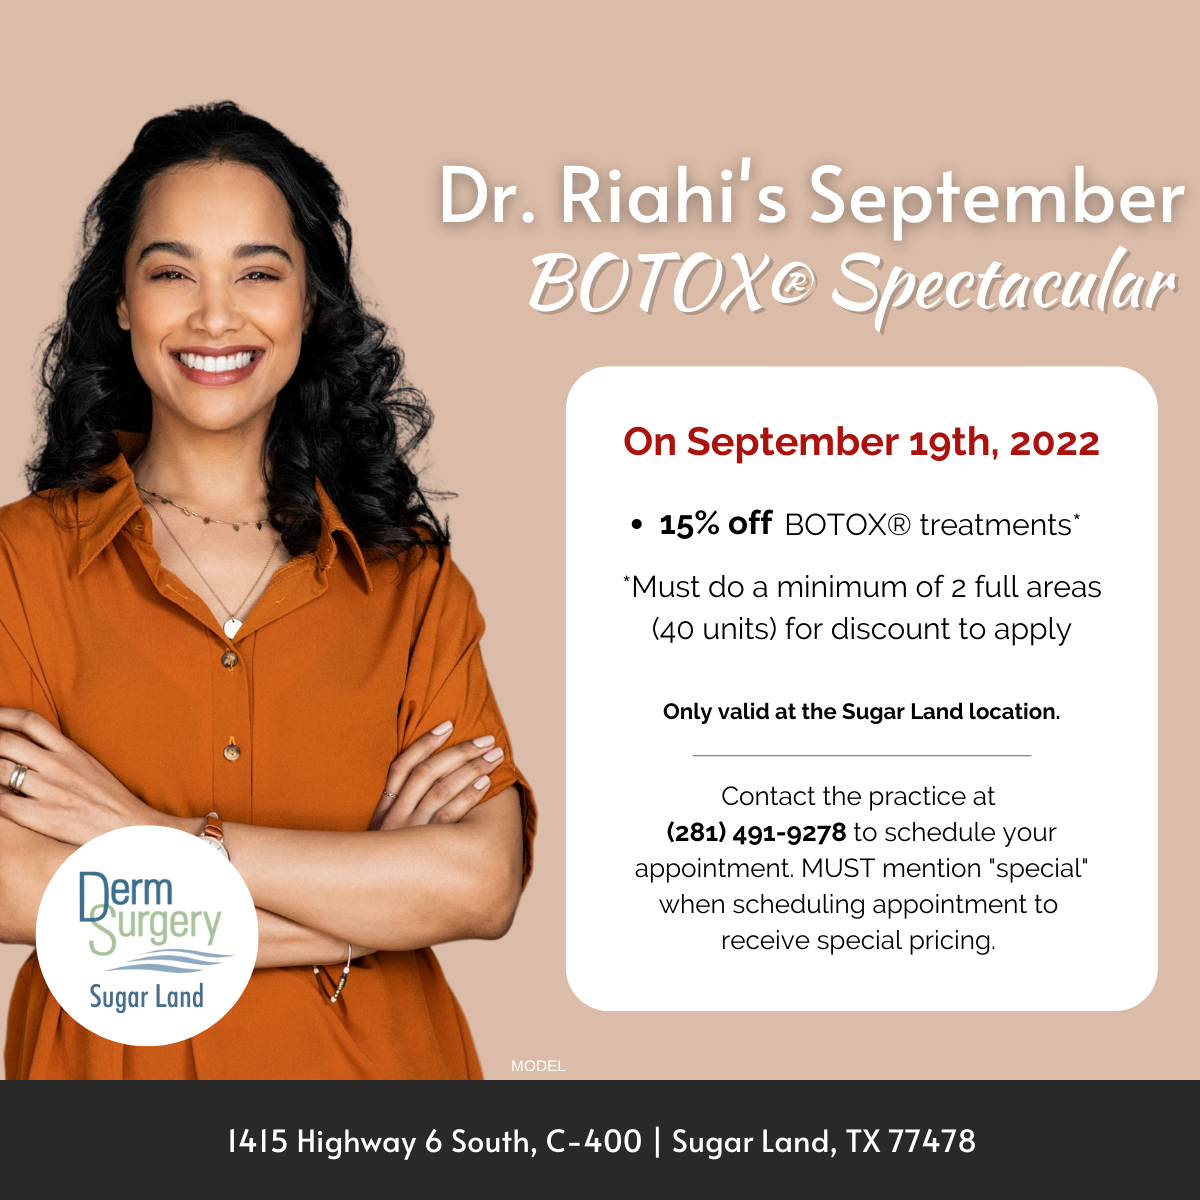 Dr. Riahi's September BOTOX® Spectacular